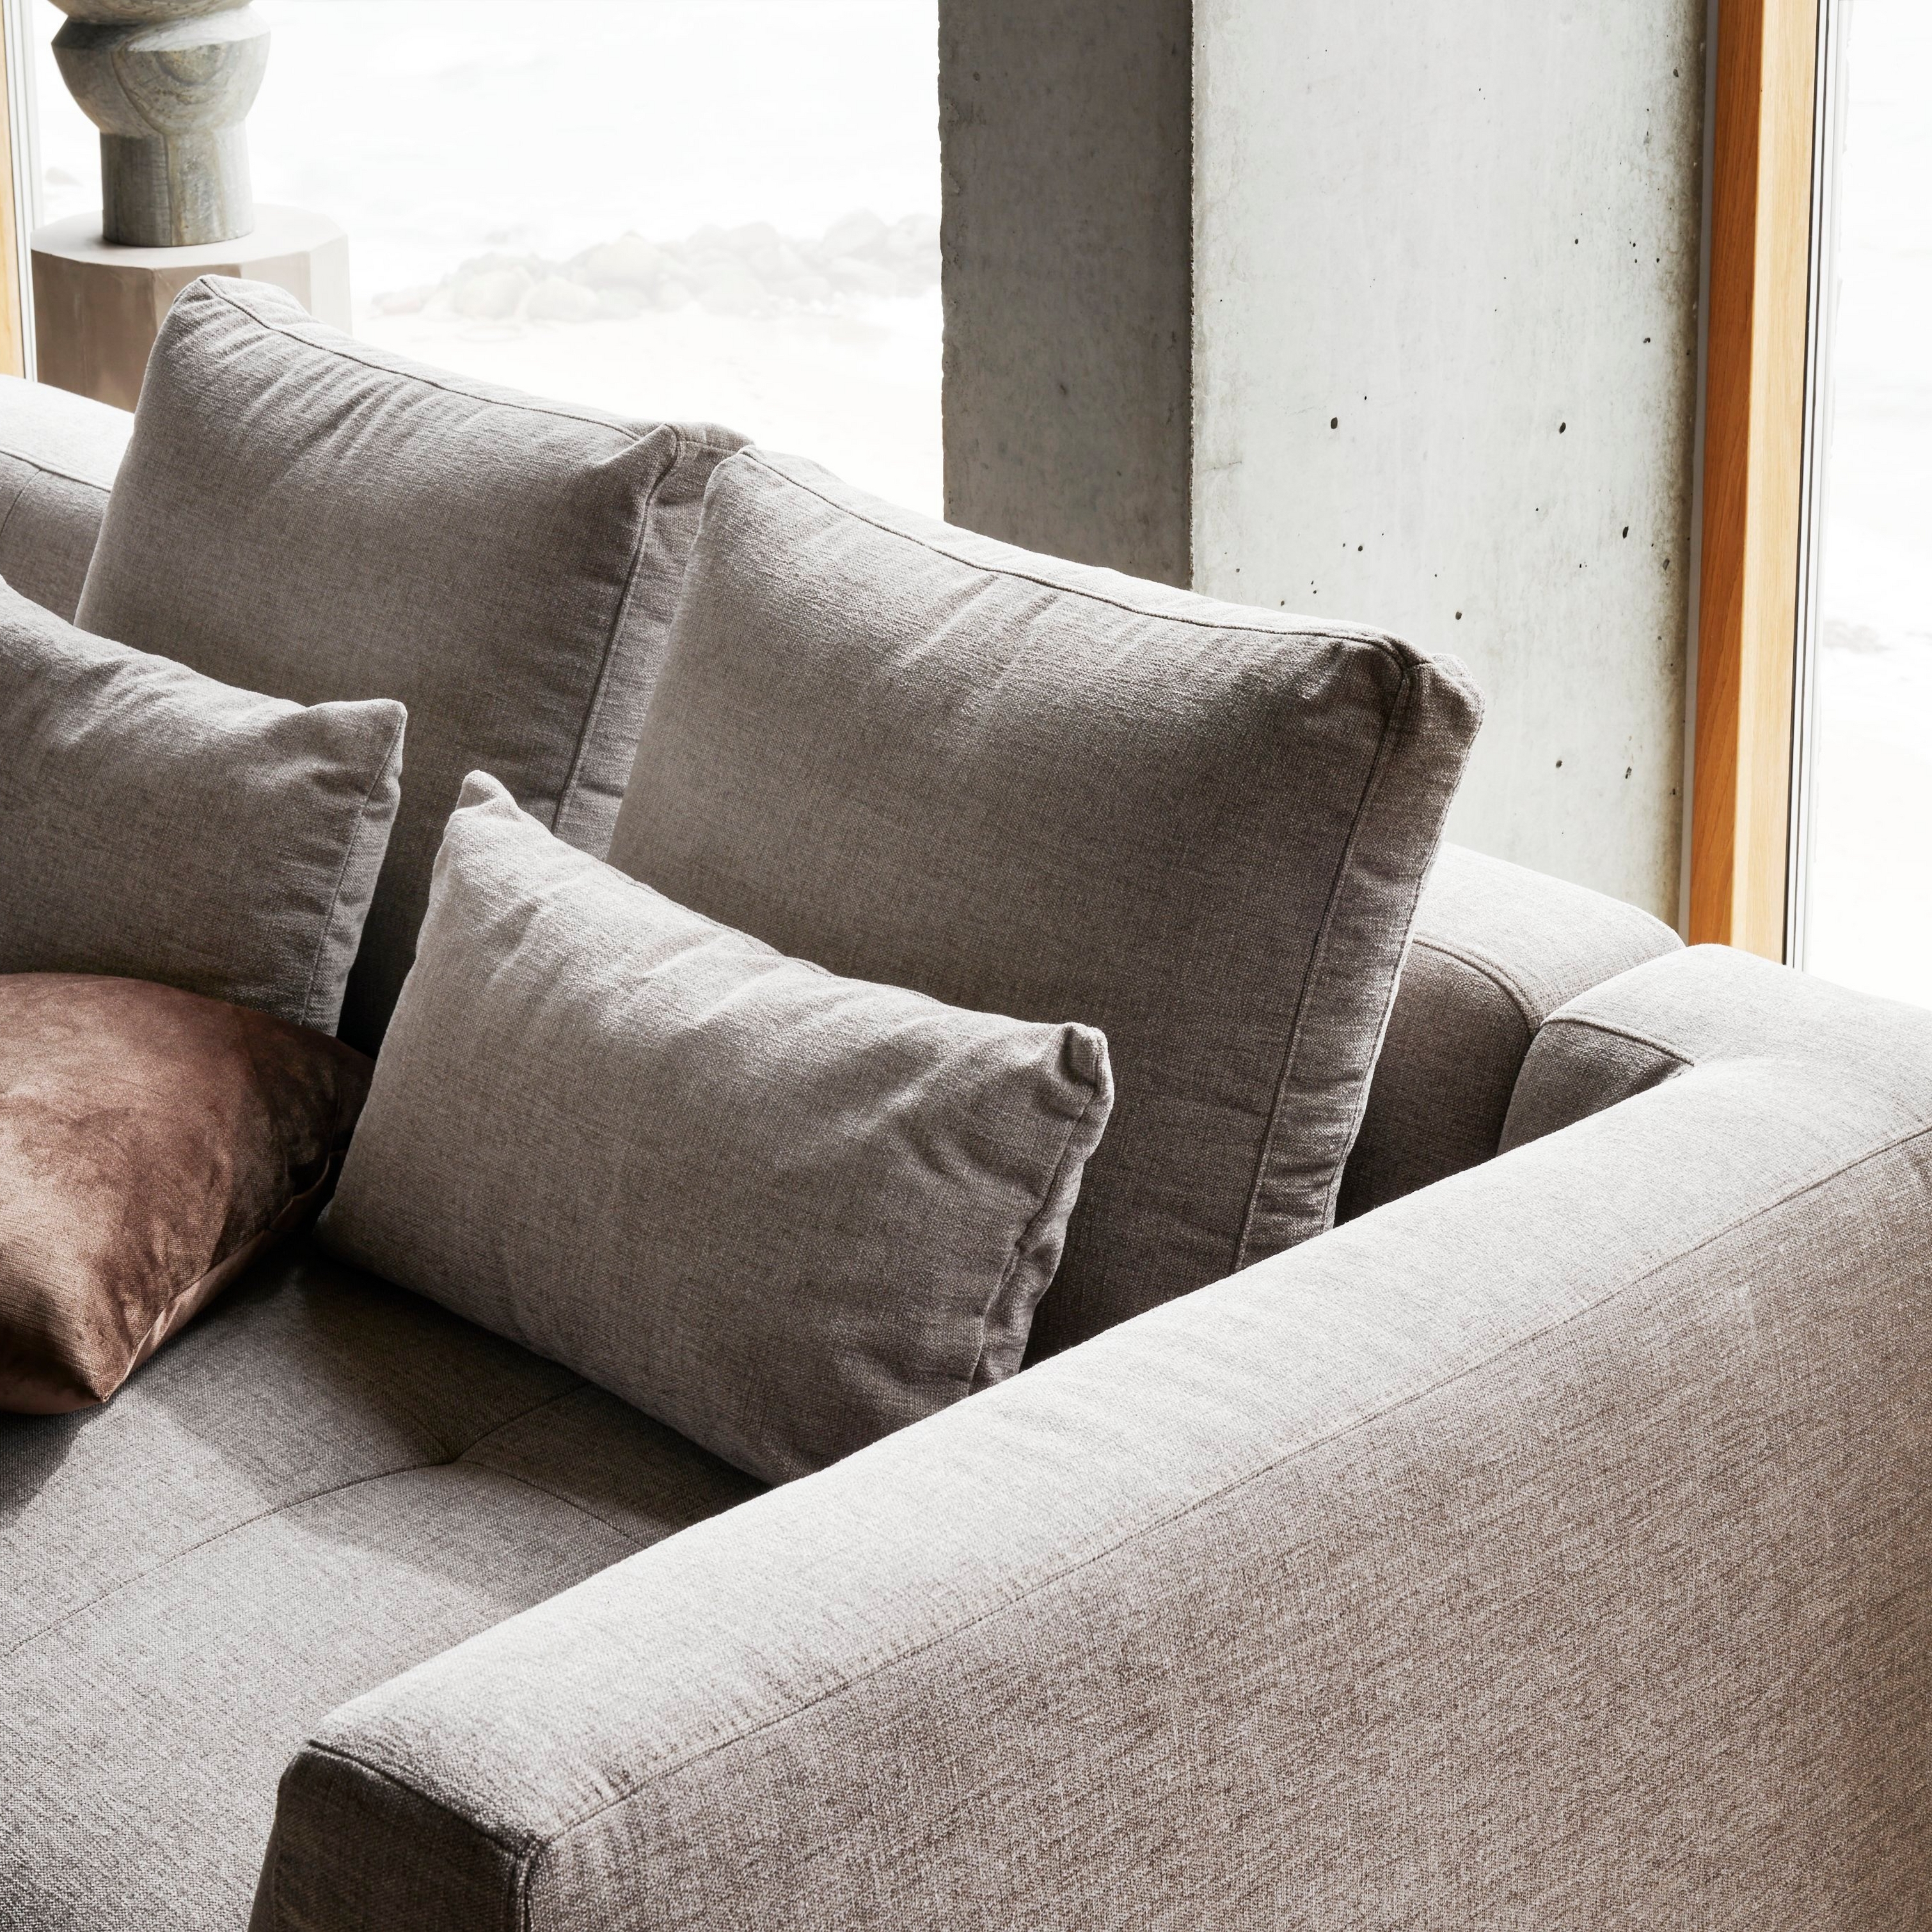 Bergamo Deco cushions displayed in the Bergamo sofa